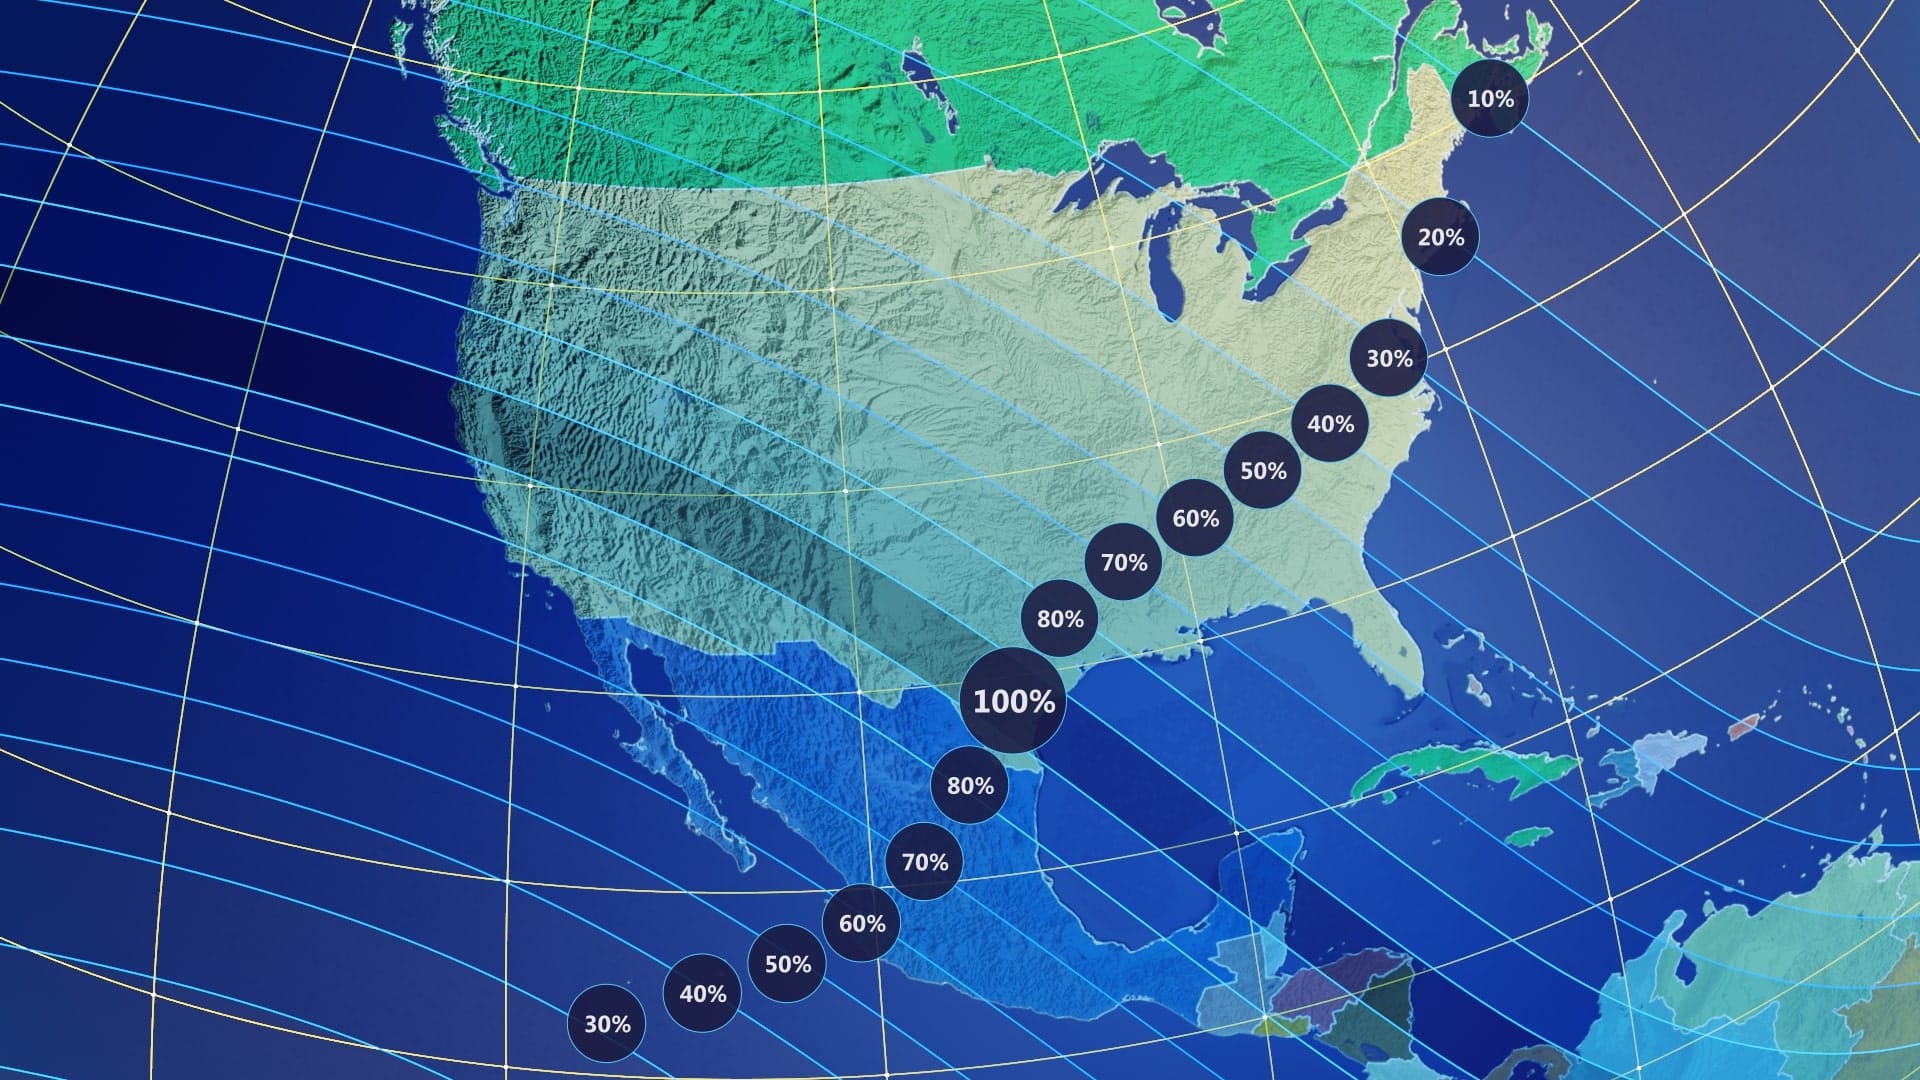 The annular solar eclipse path over North America